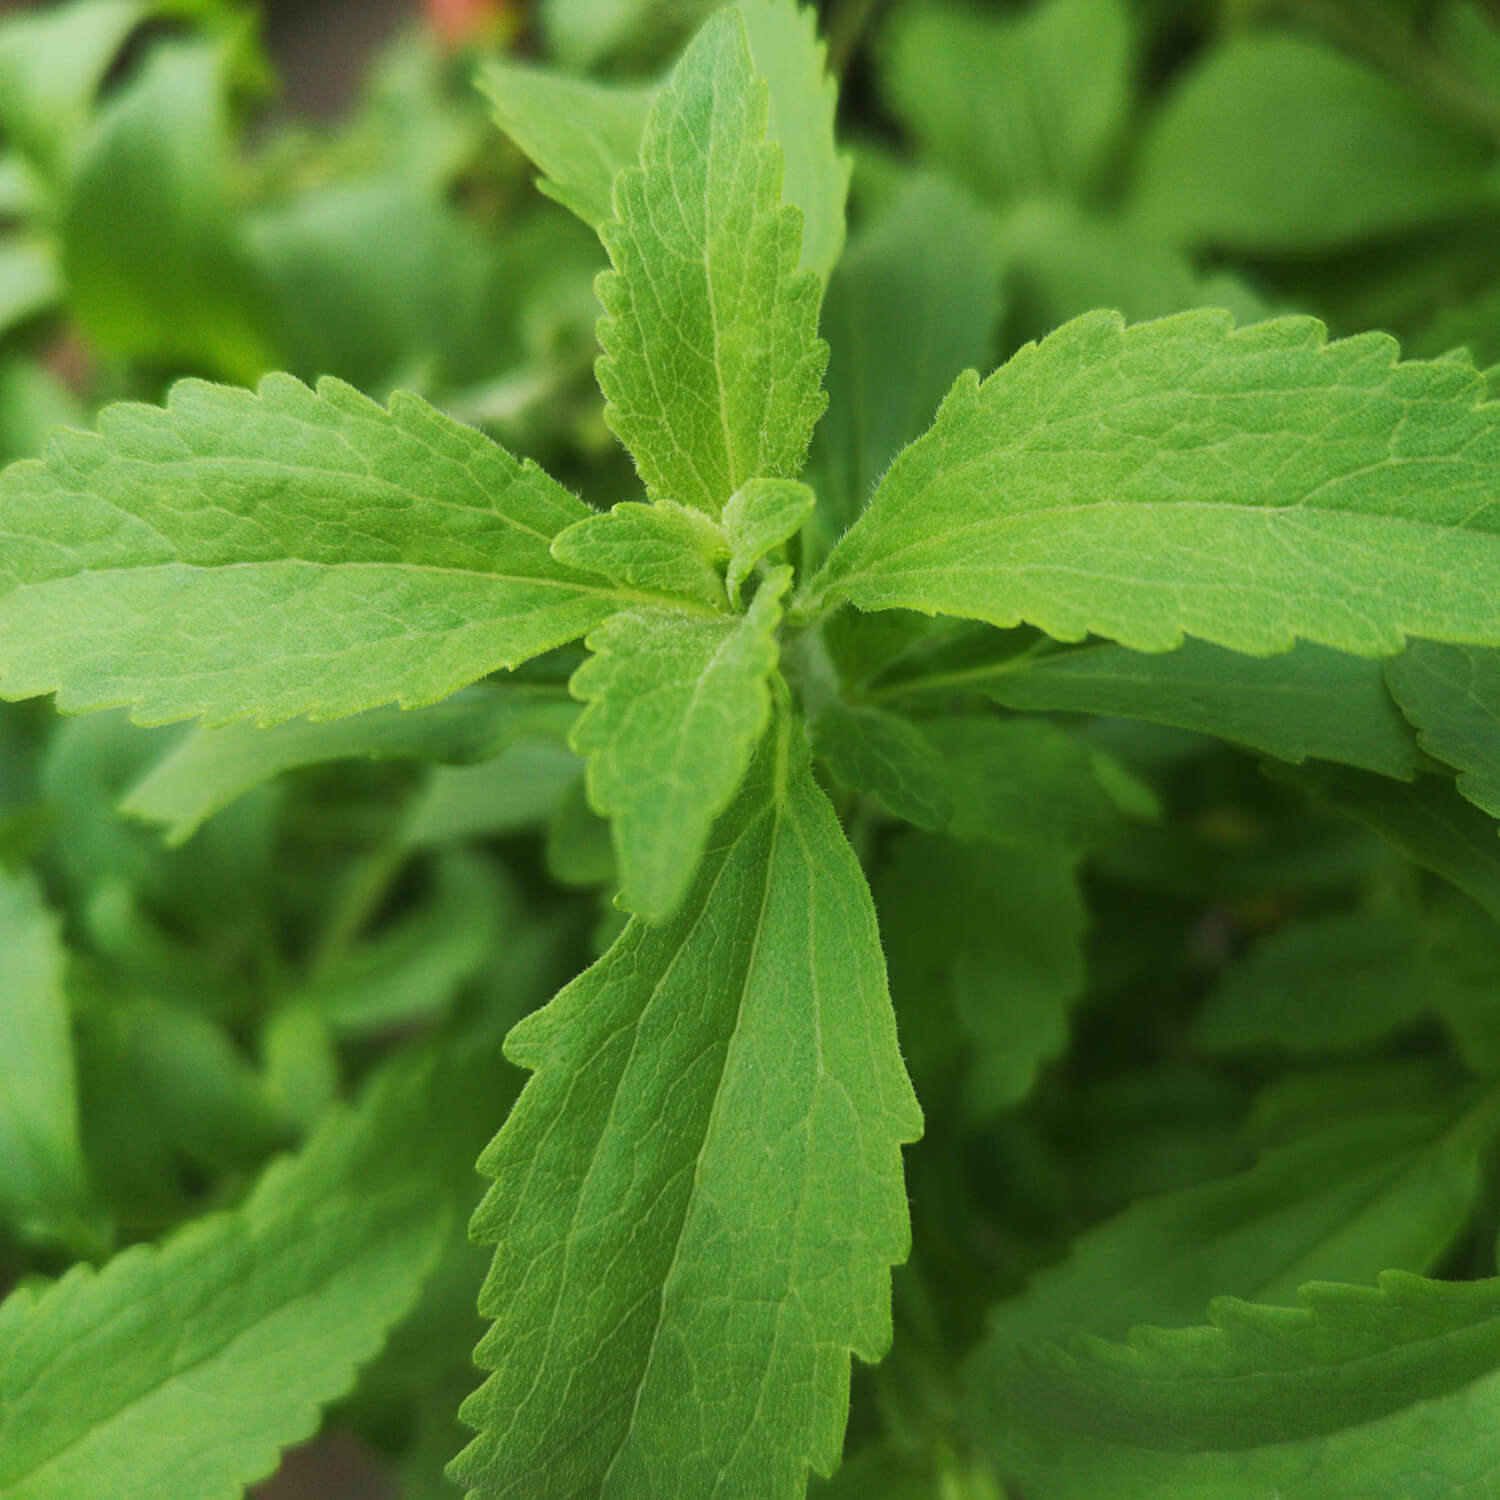 The leaves of the Stevia plant | Stevia rebaudiana